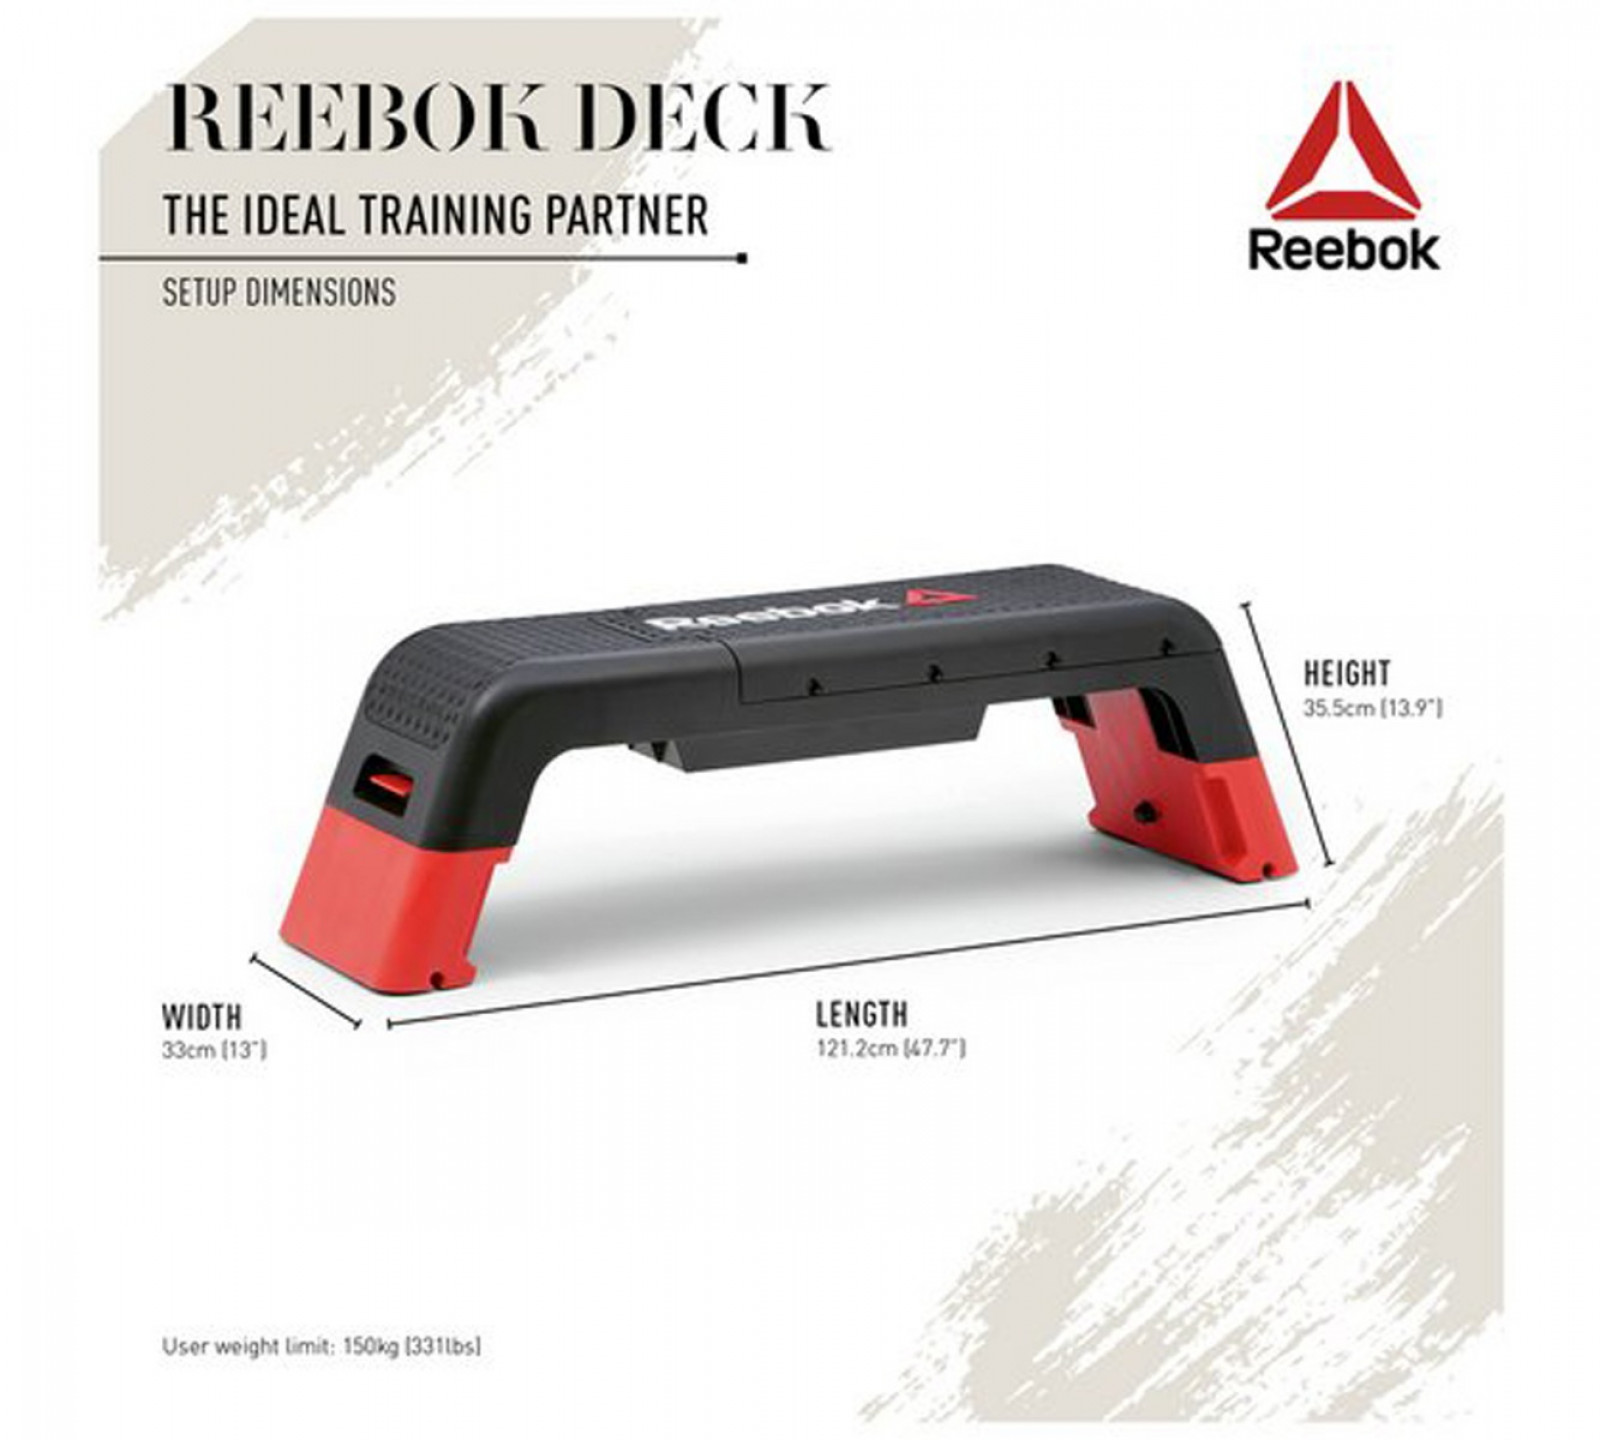 reebok deck dimensions